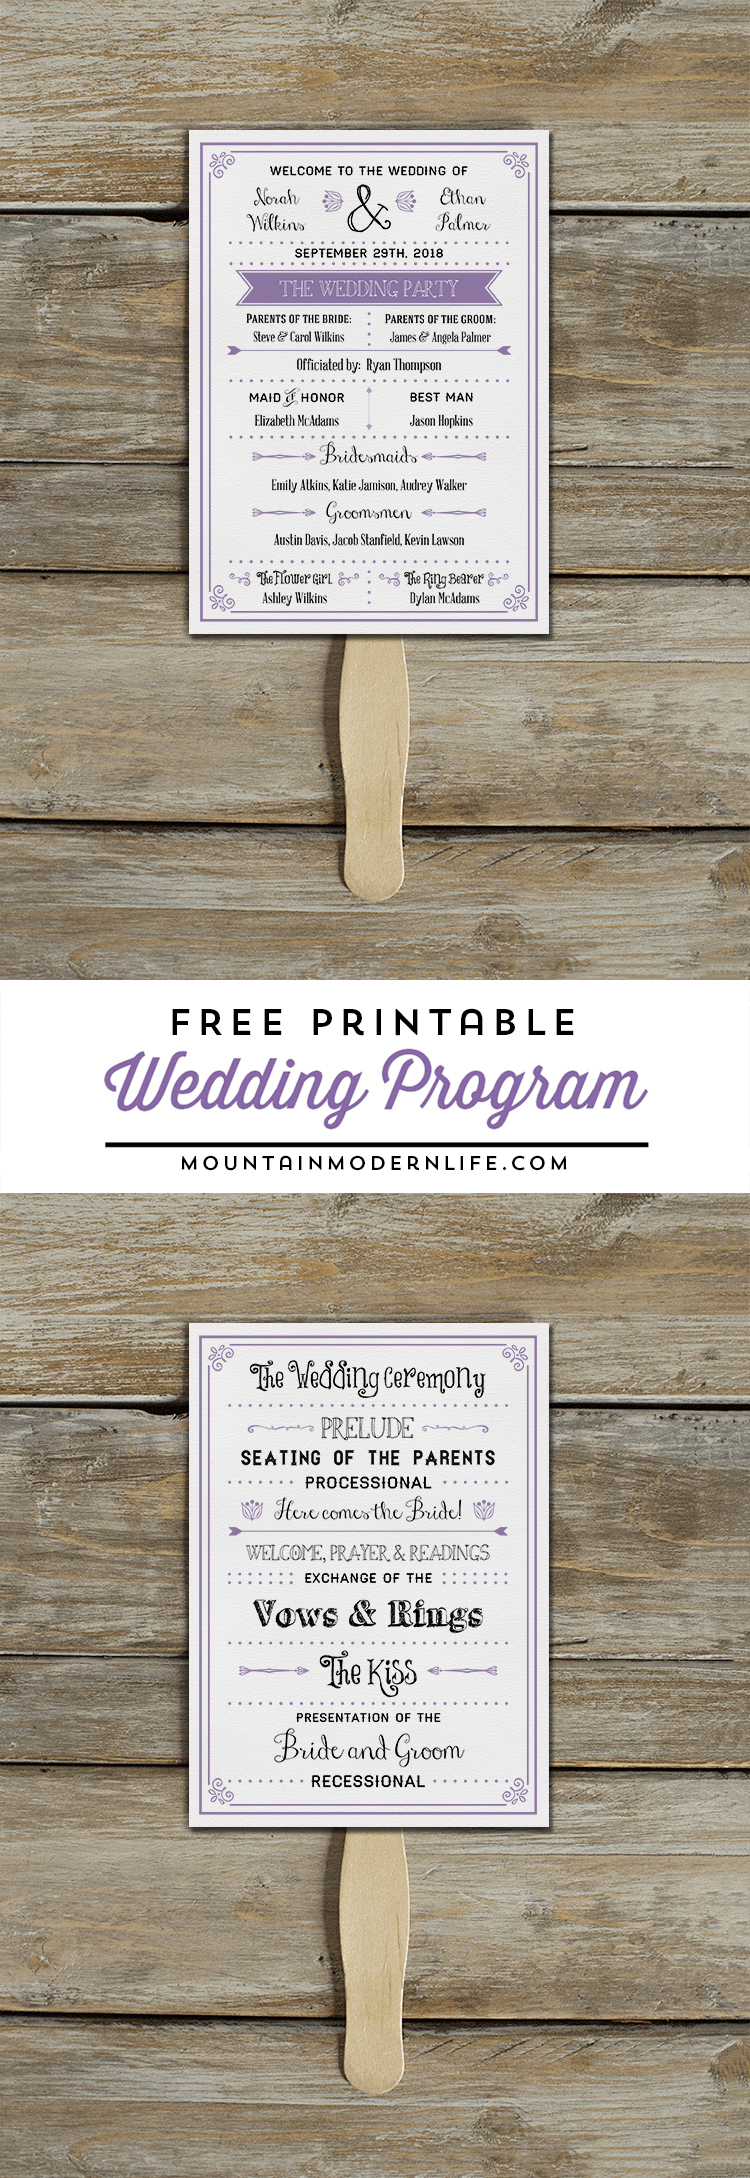 Free Printable Wedding Program | Mountainmodernlife - Free Printable Wedding Programs